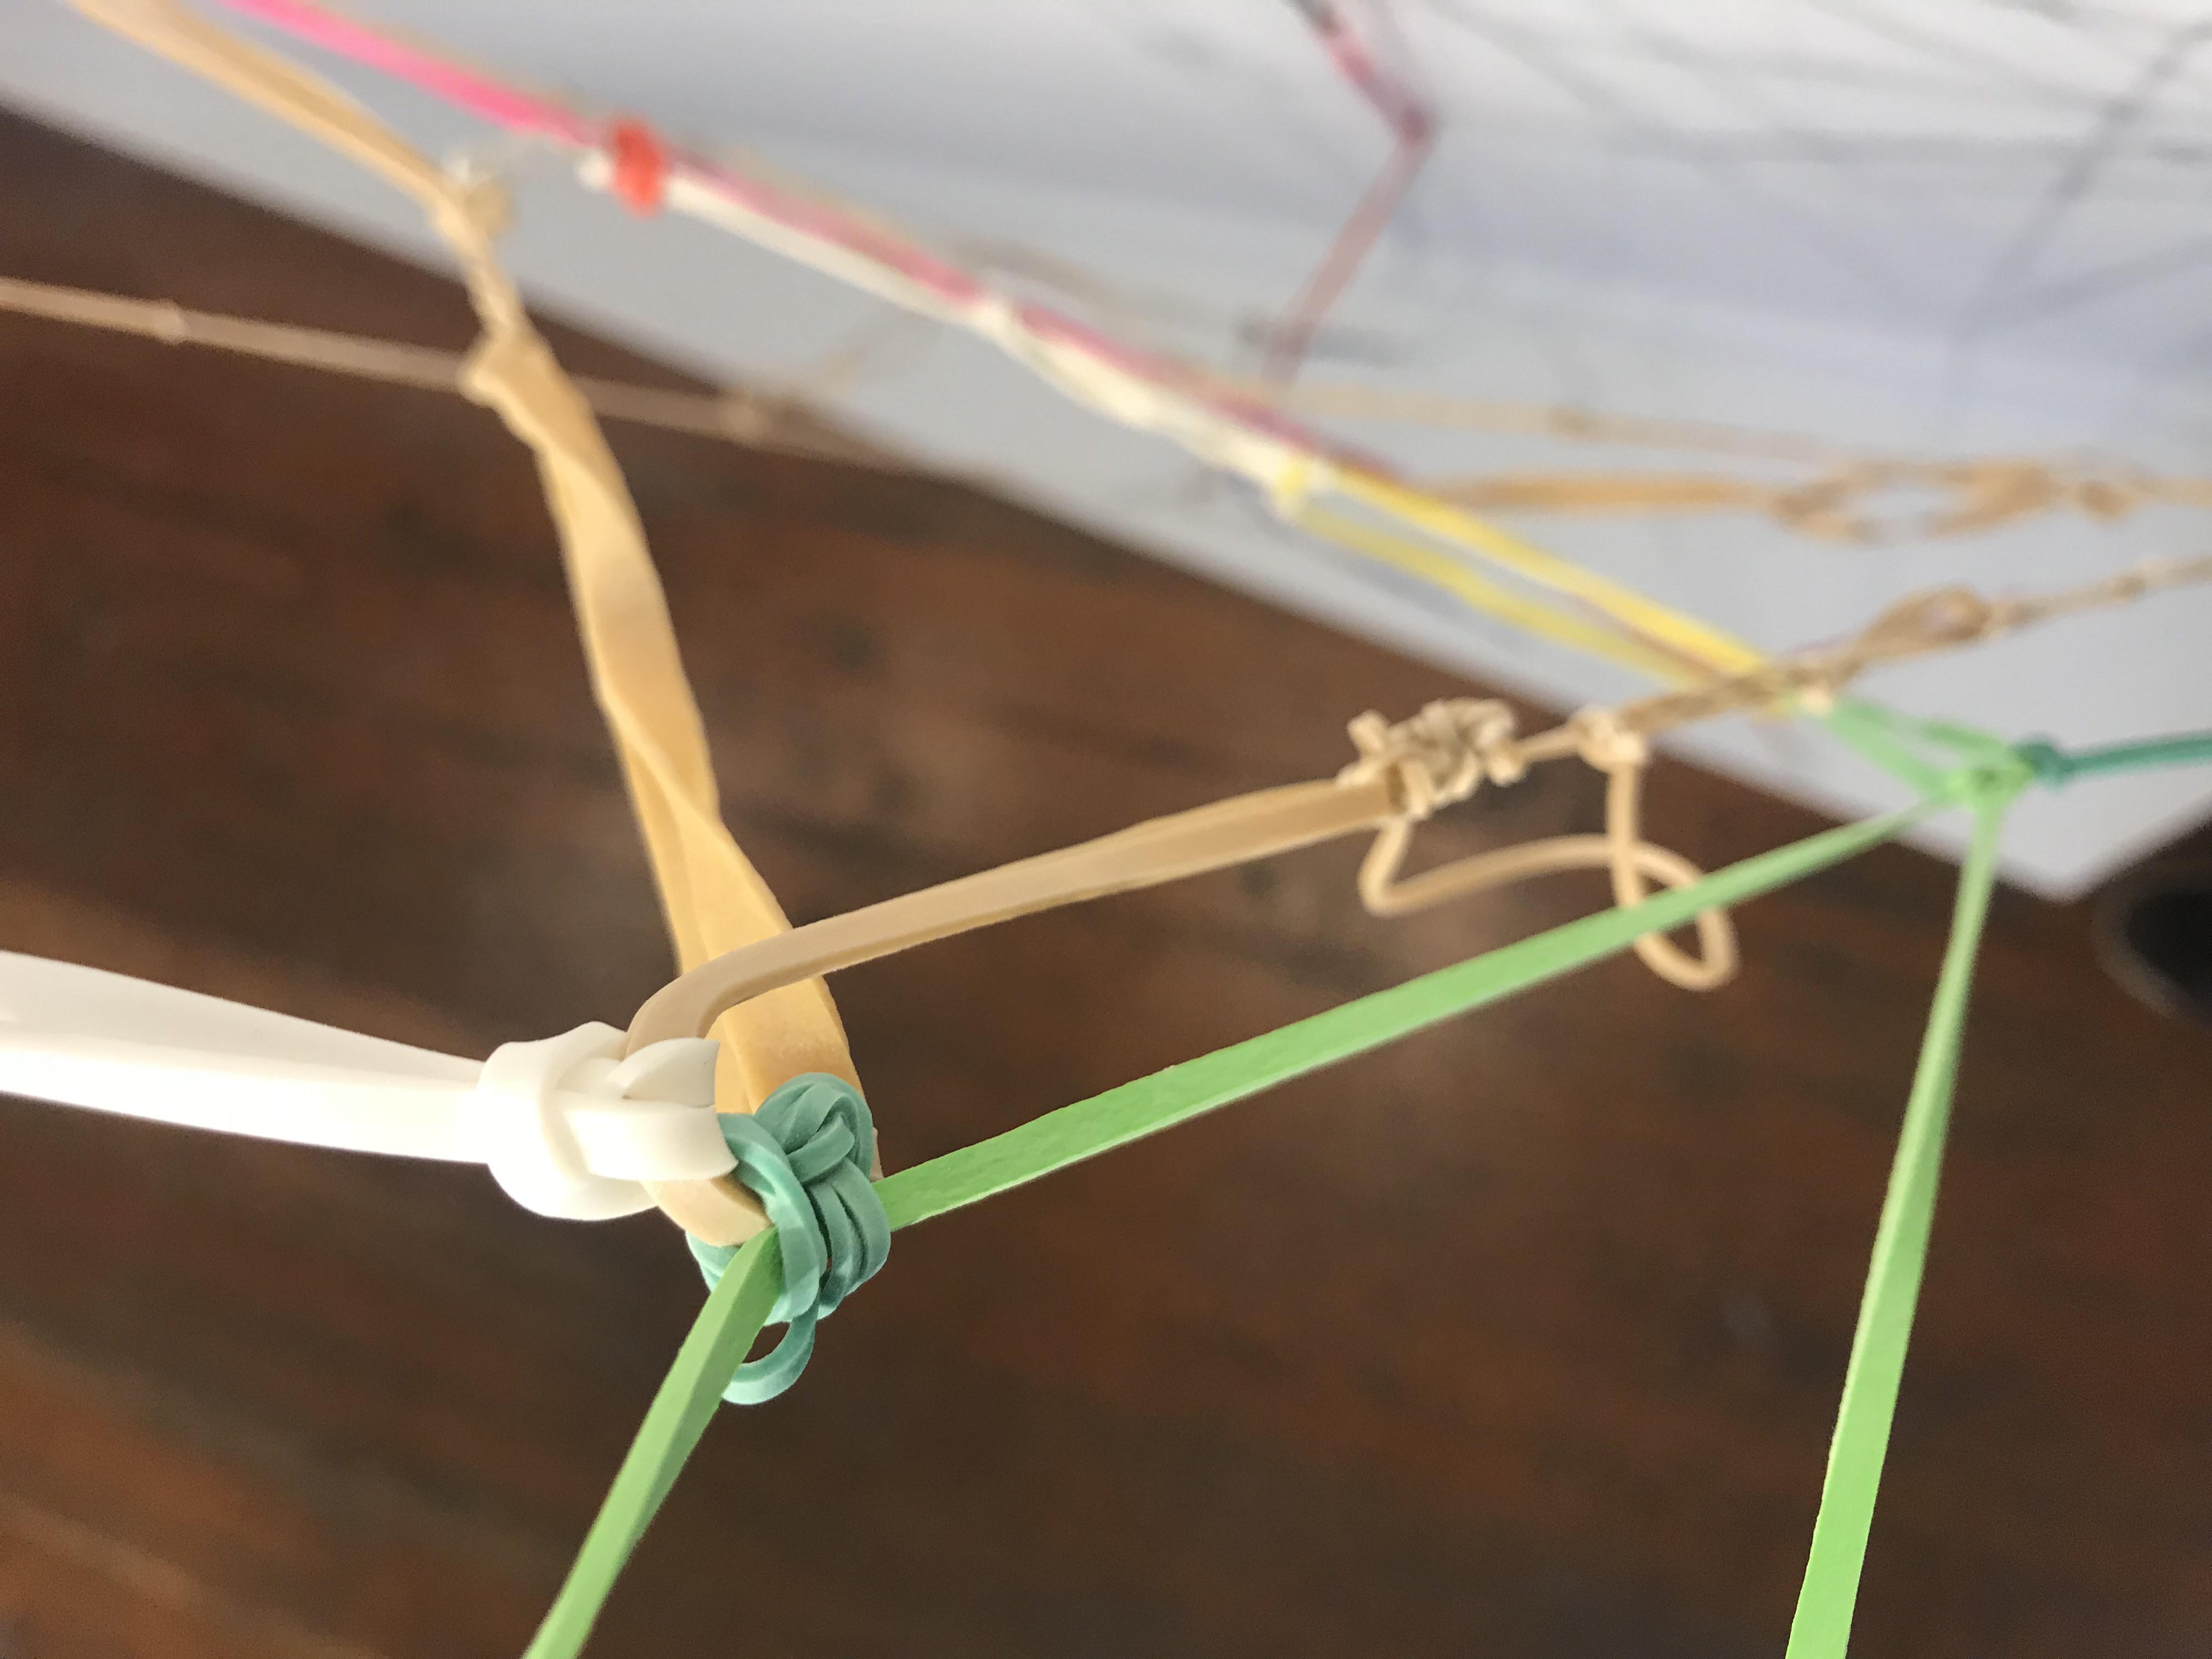 Close up image Eva Enriquez's installation of rubber bands tied together 